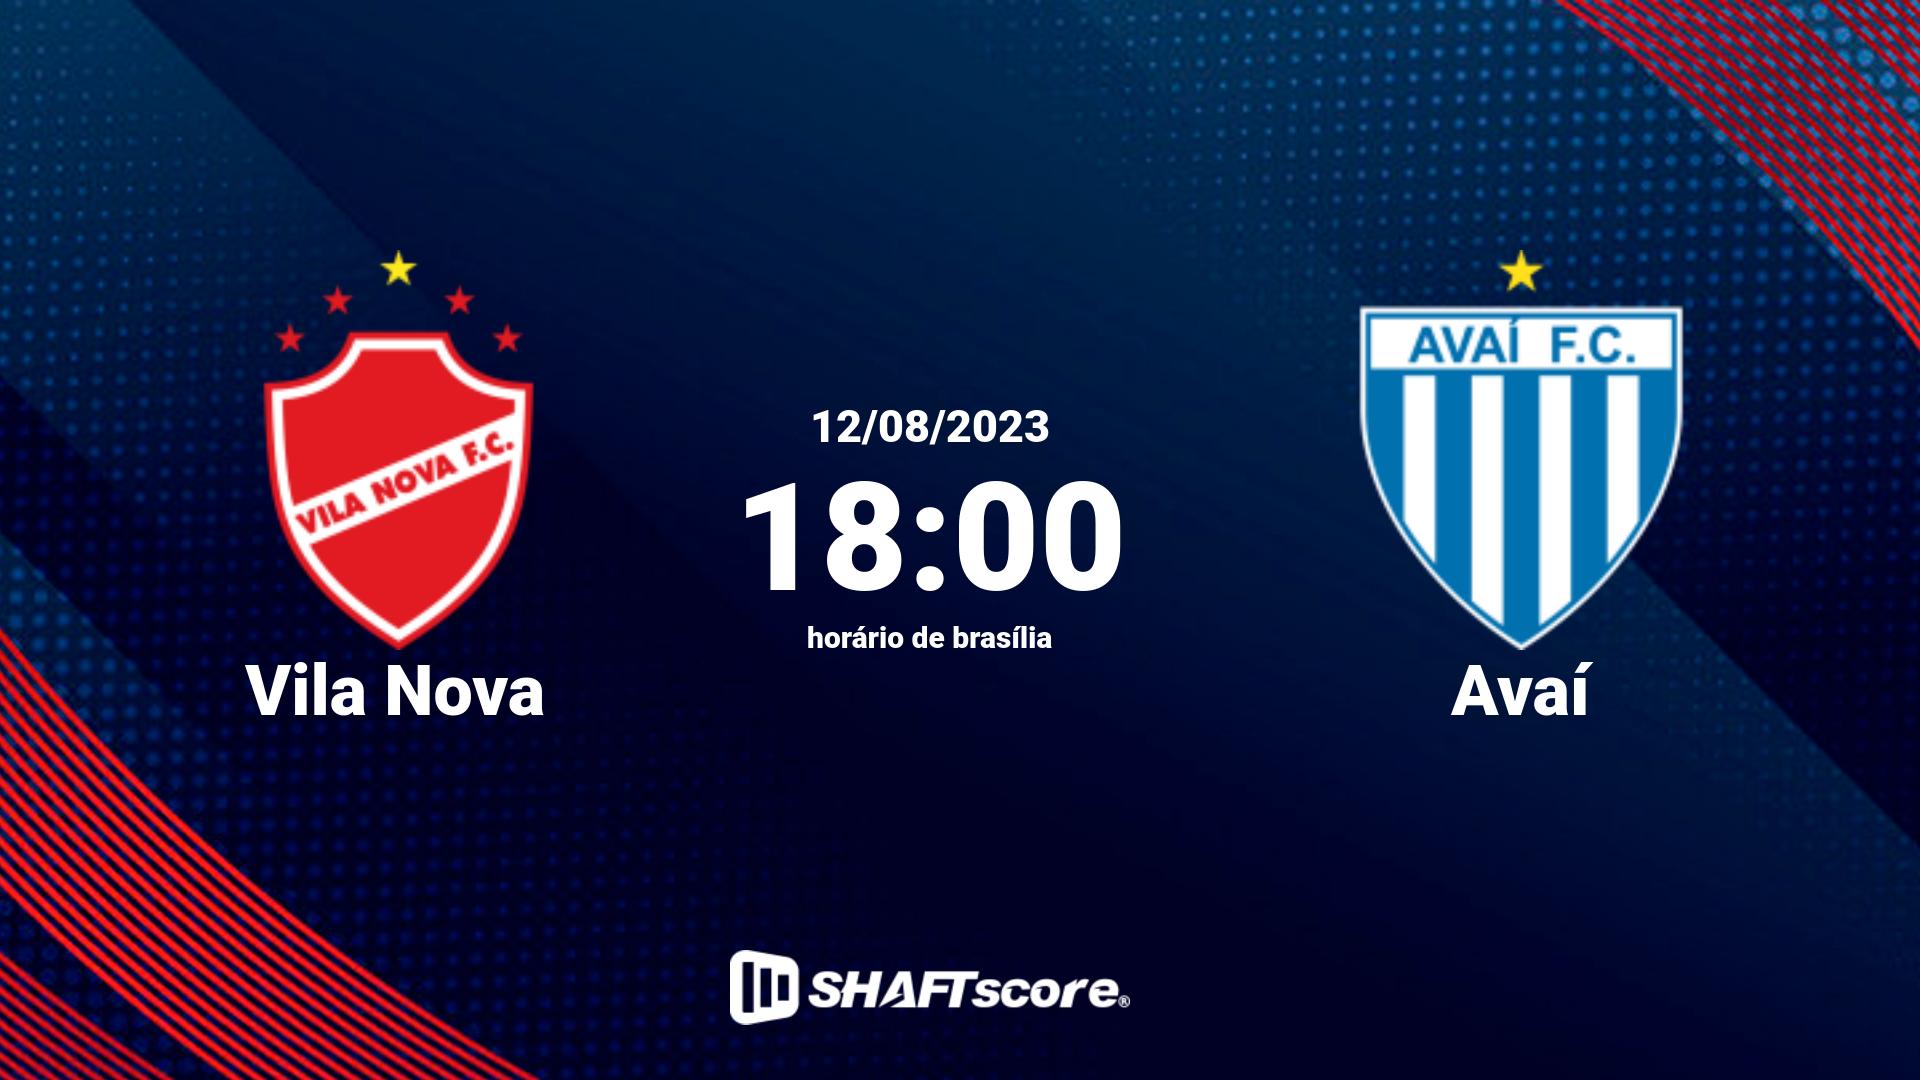 Estatísticas do jogo Vila Nova vs Avaí 12.08 18:00